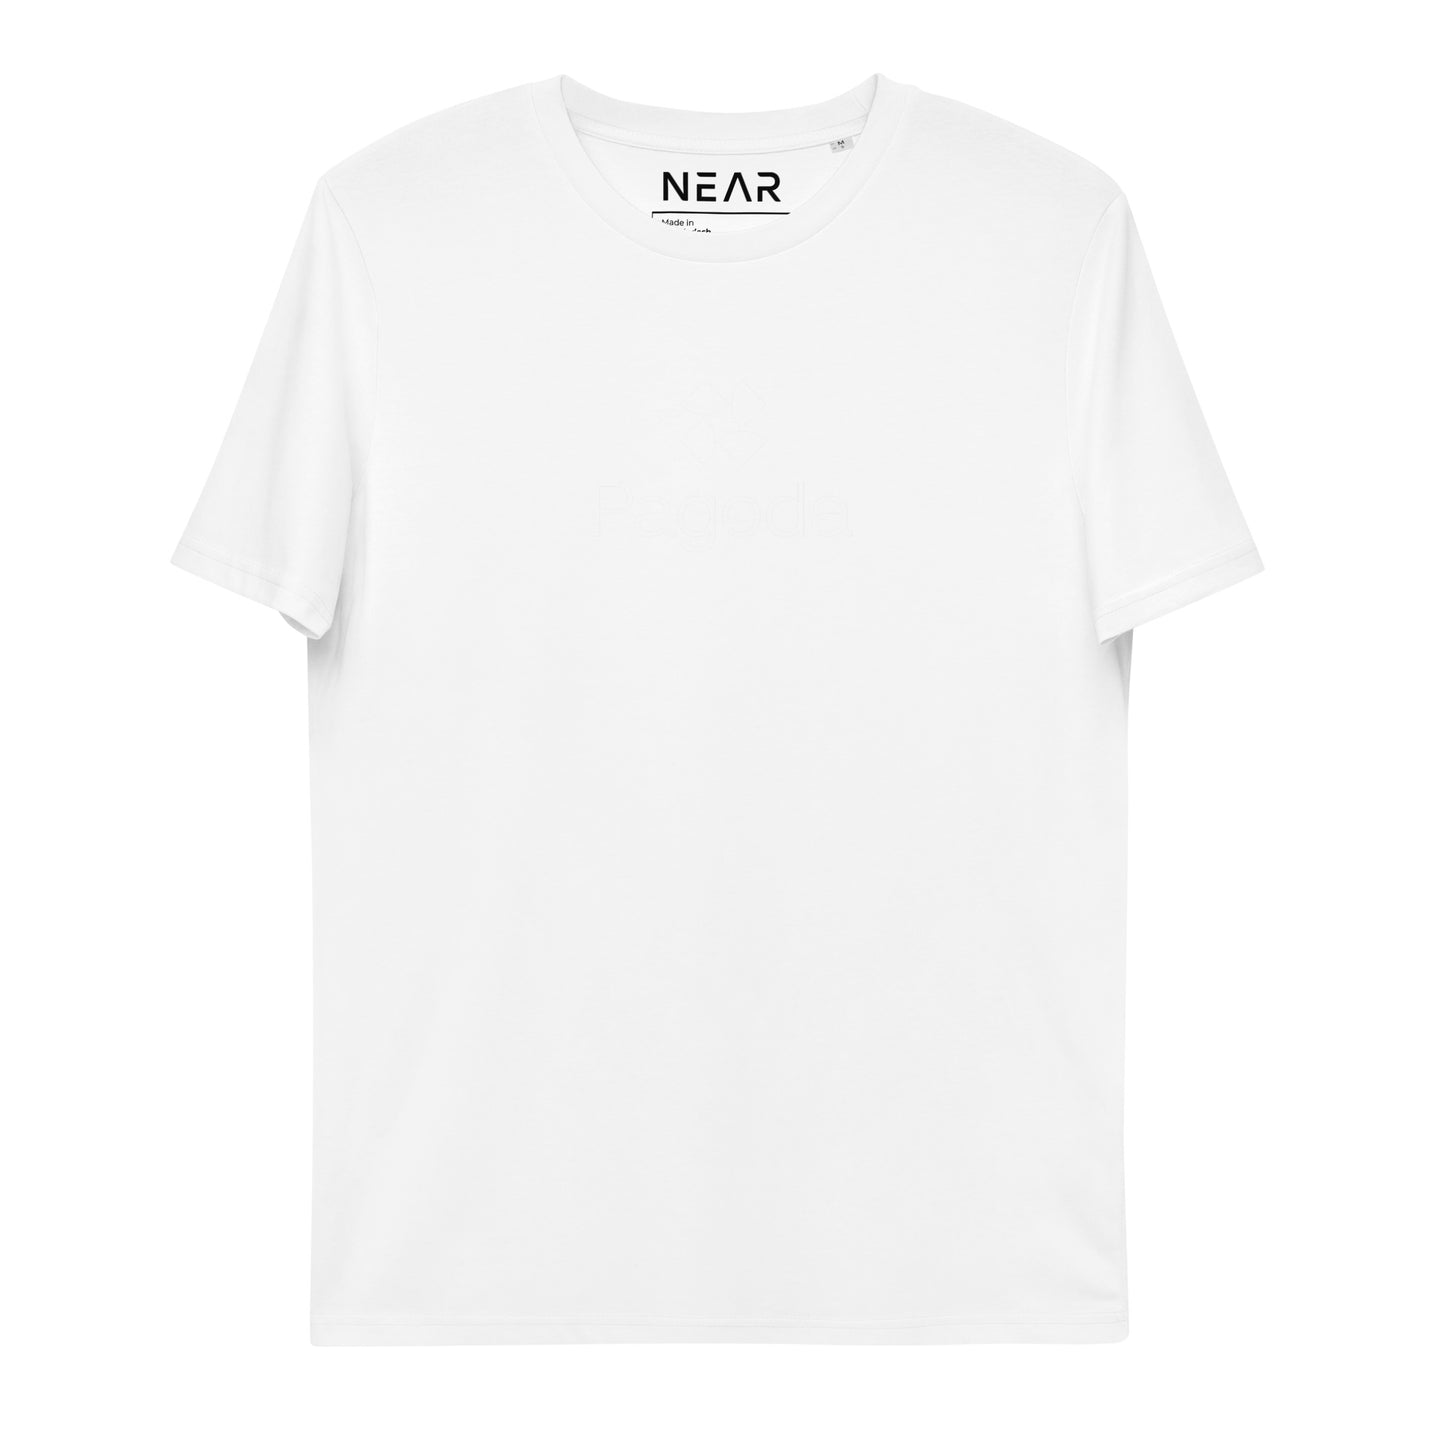 PAGODA—Core White Logo T-Shirt